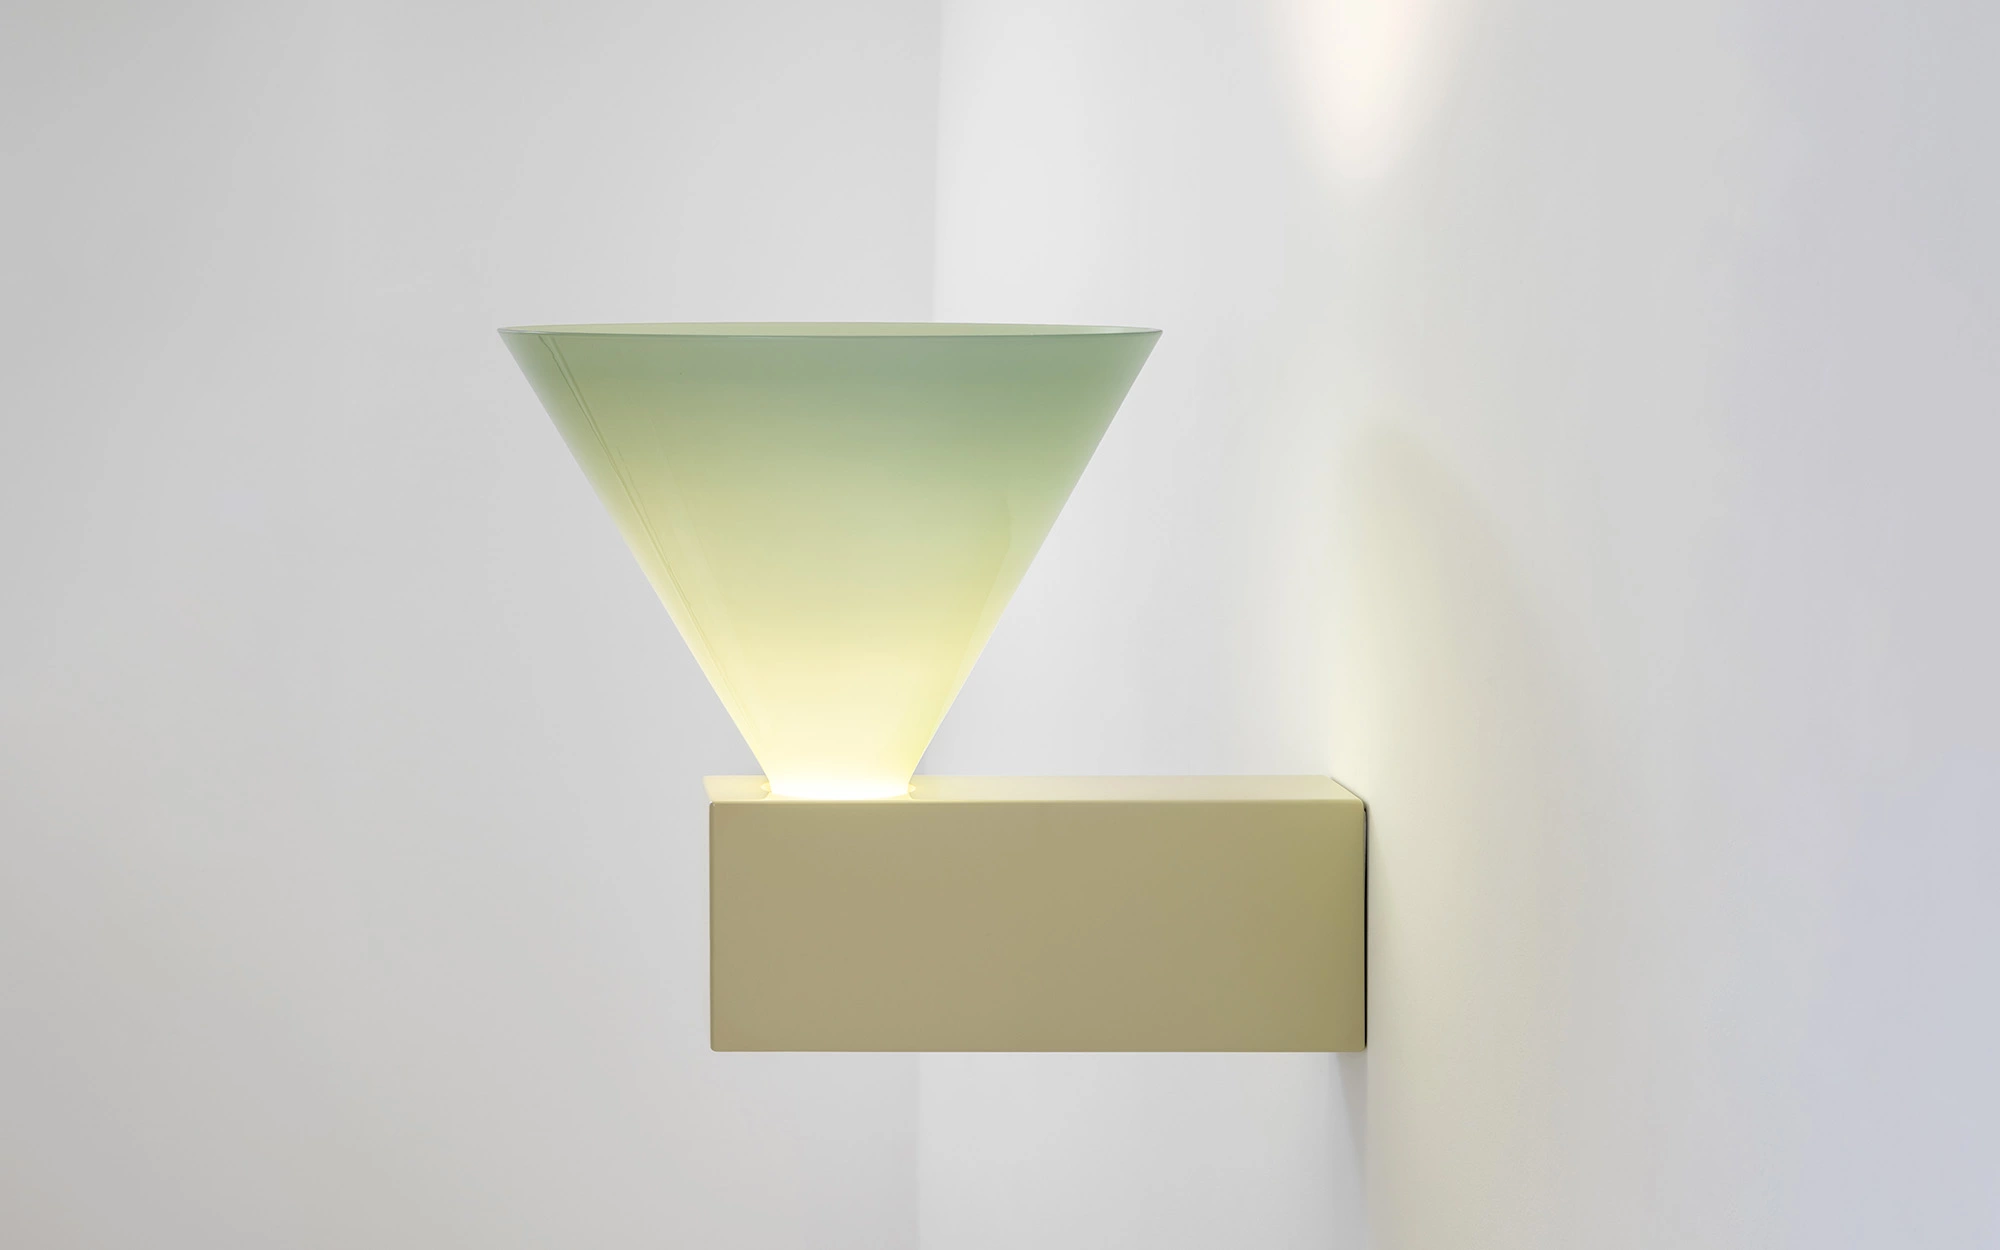 Signal W MONOCHROMATIC - Edward Barber and Jay Osgerby - wall-light - Galerie kreo